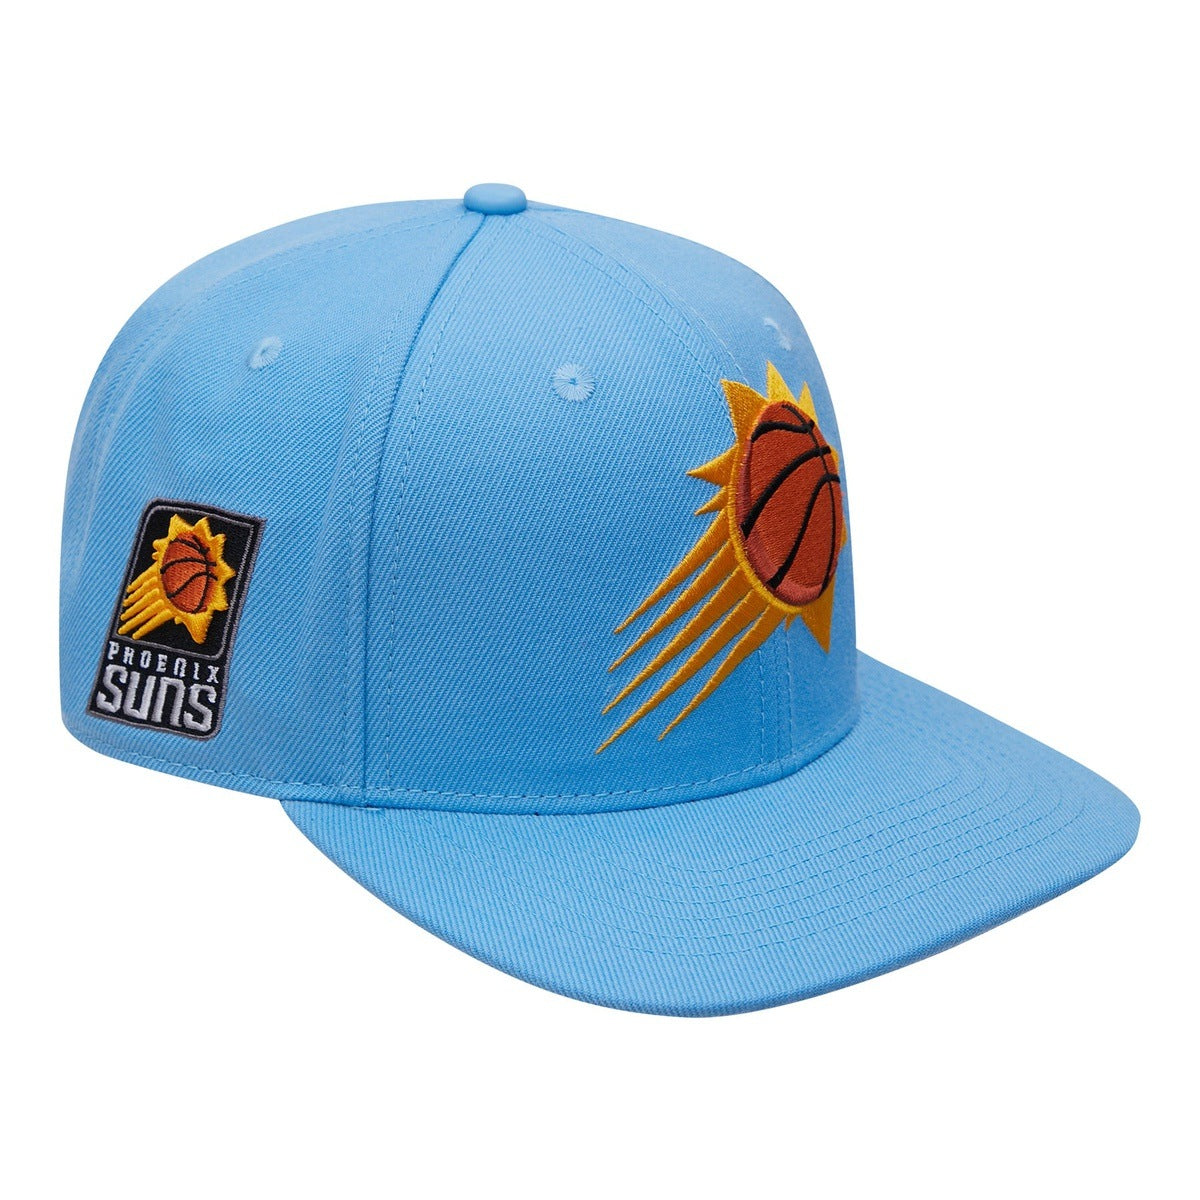 New Era 9FIFTY Phoenix Suns Orange Snapback Hat